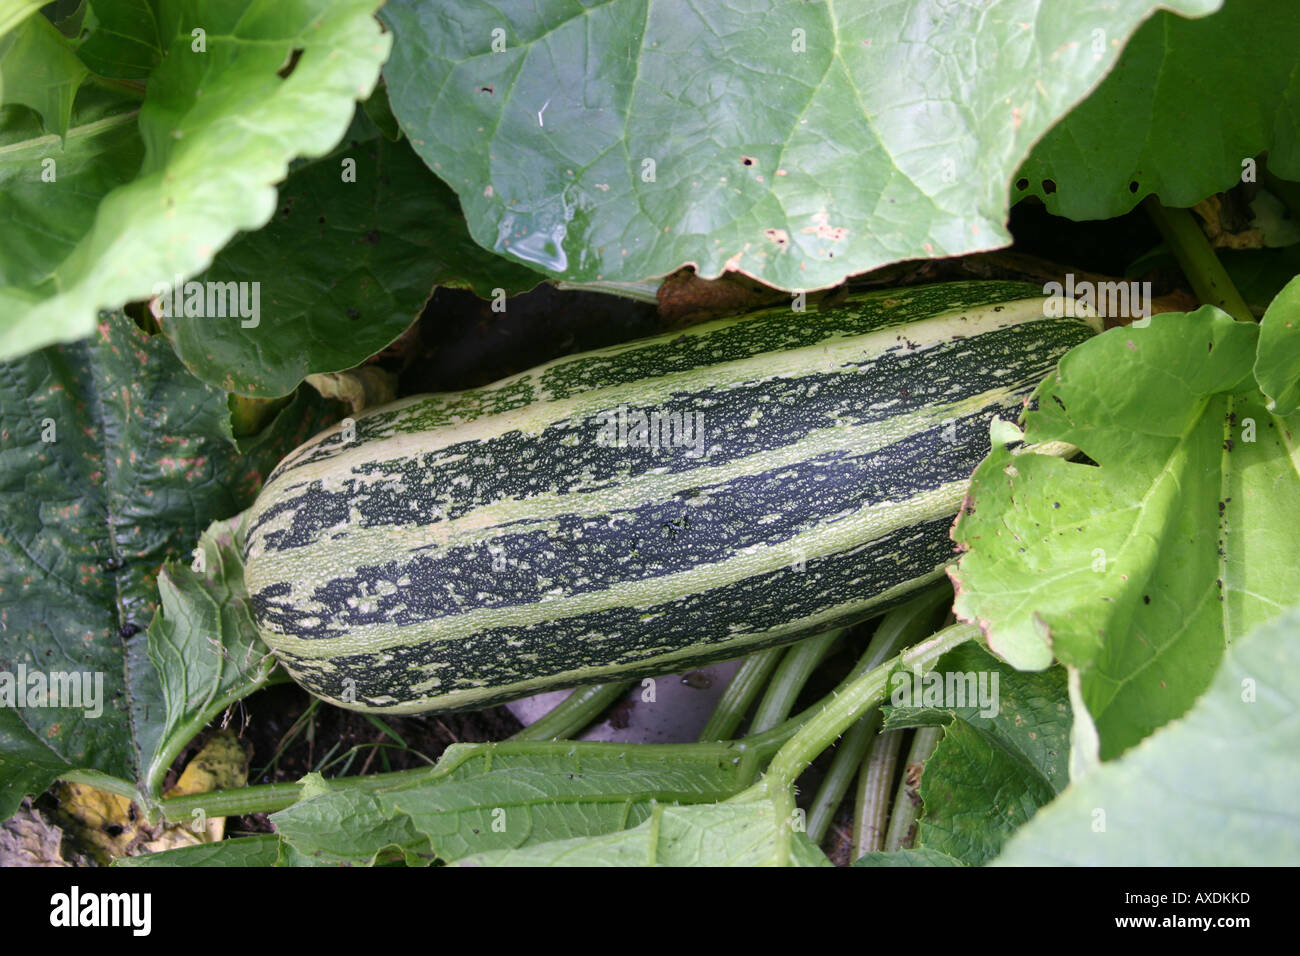 Vegetable marrow in situ dans le jardin. Banque D'Images